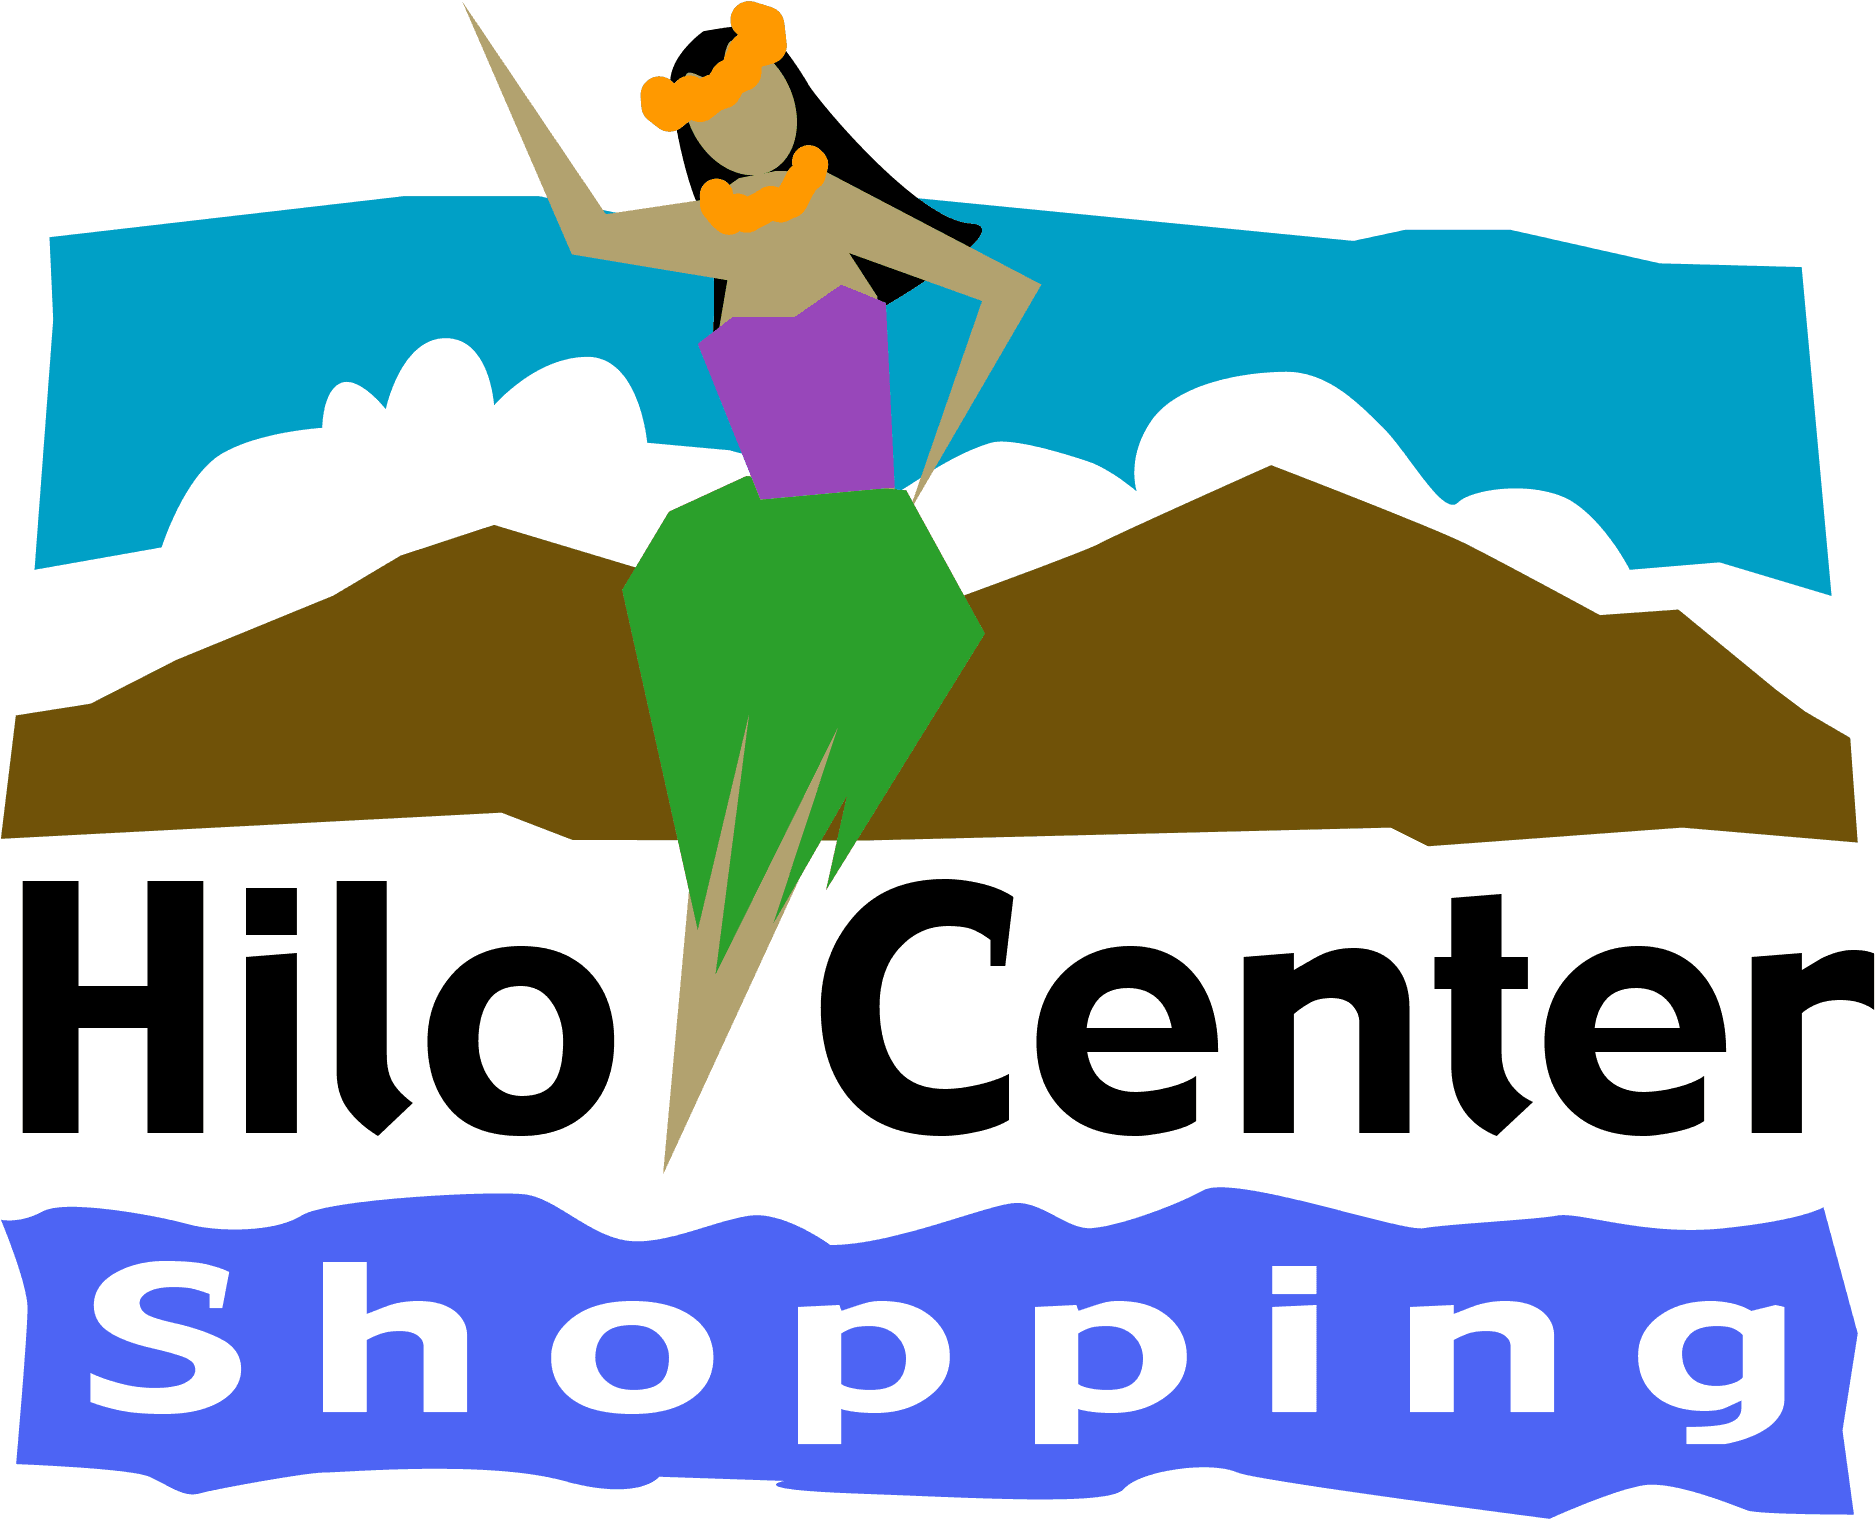 Hilo Shopping Center - Illustration (2398x1531)